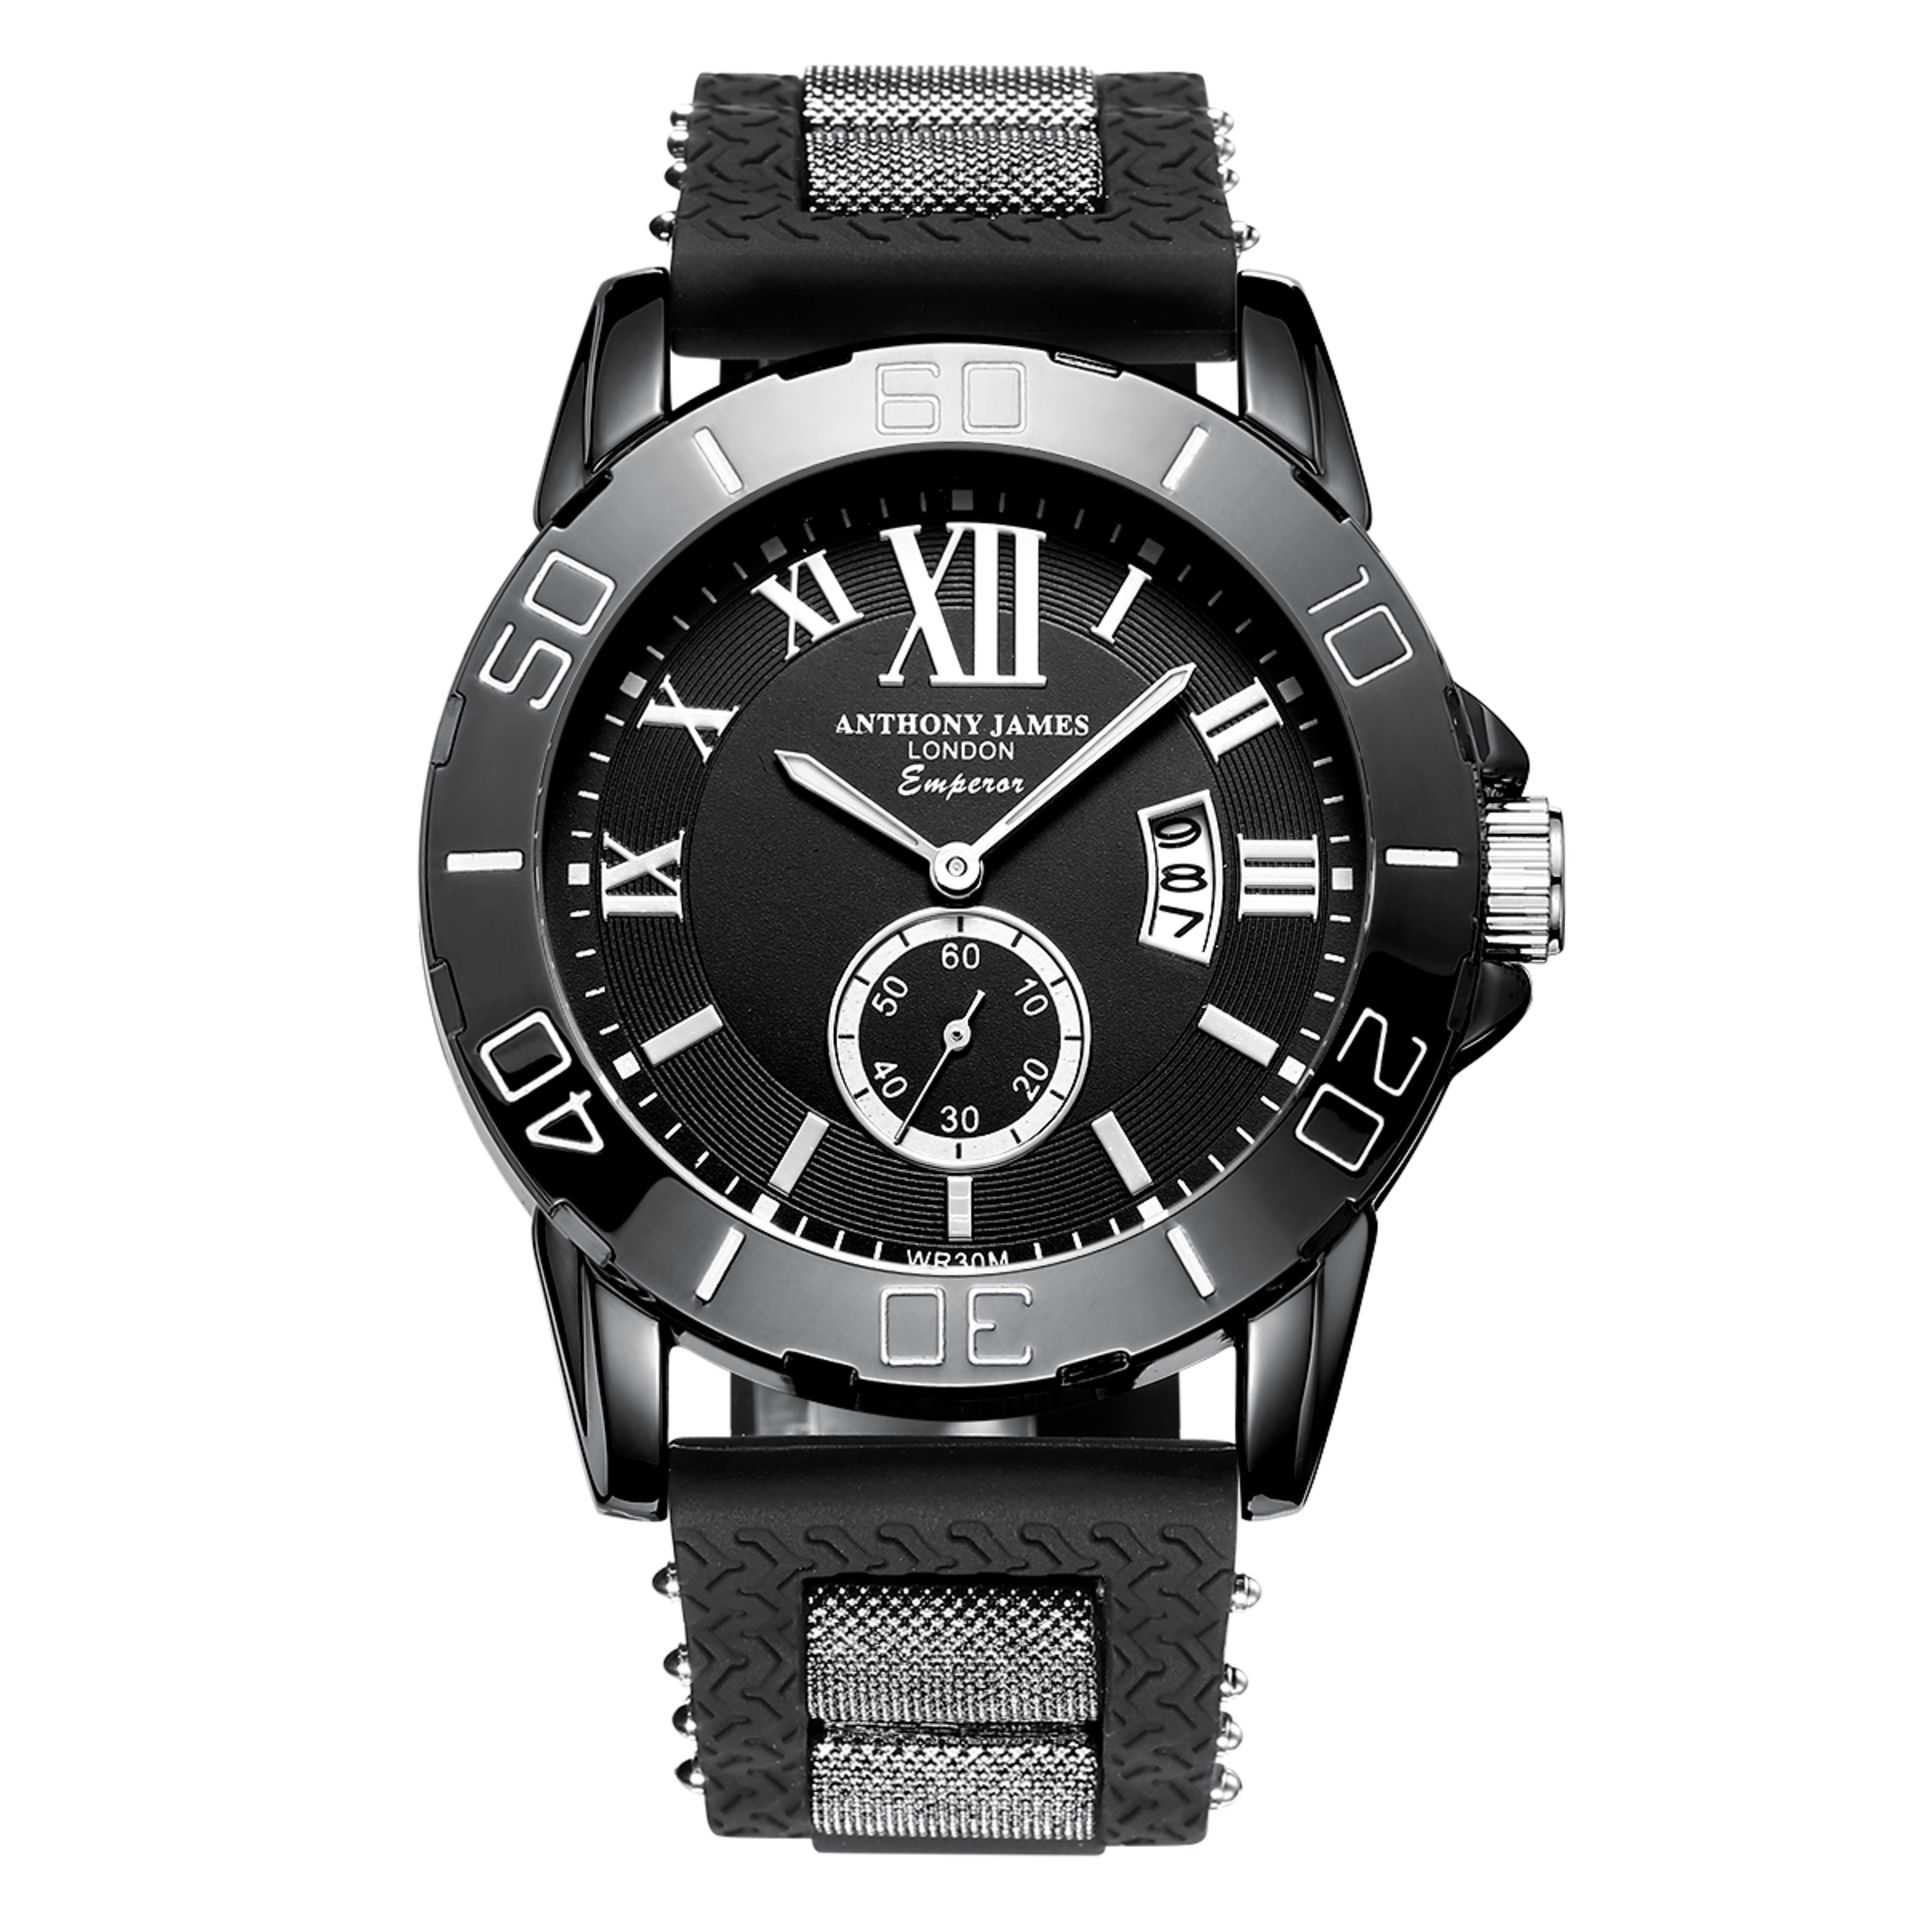 + VAT Brand New Gents Anthony James London Emperor Multi Dial Jet Black Watch - Moving Bezel - Date